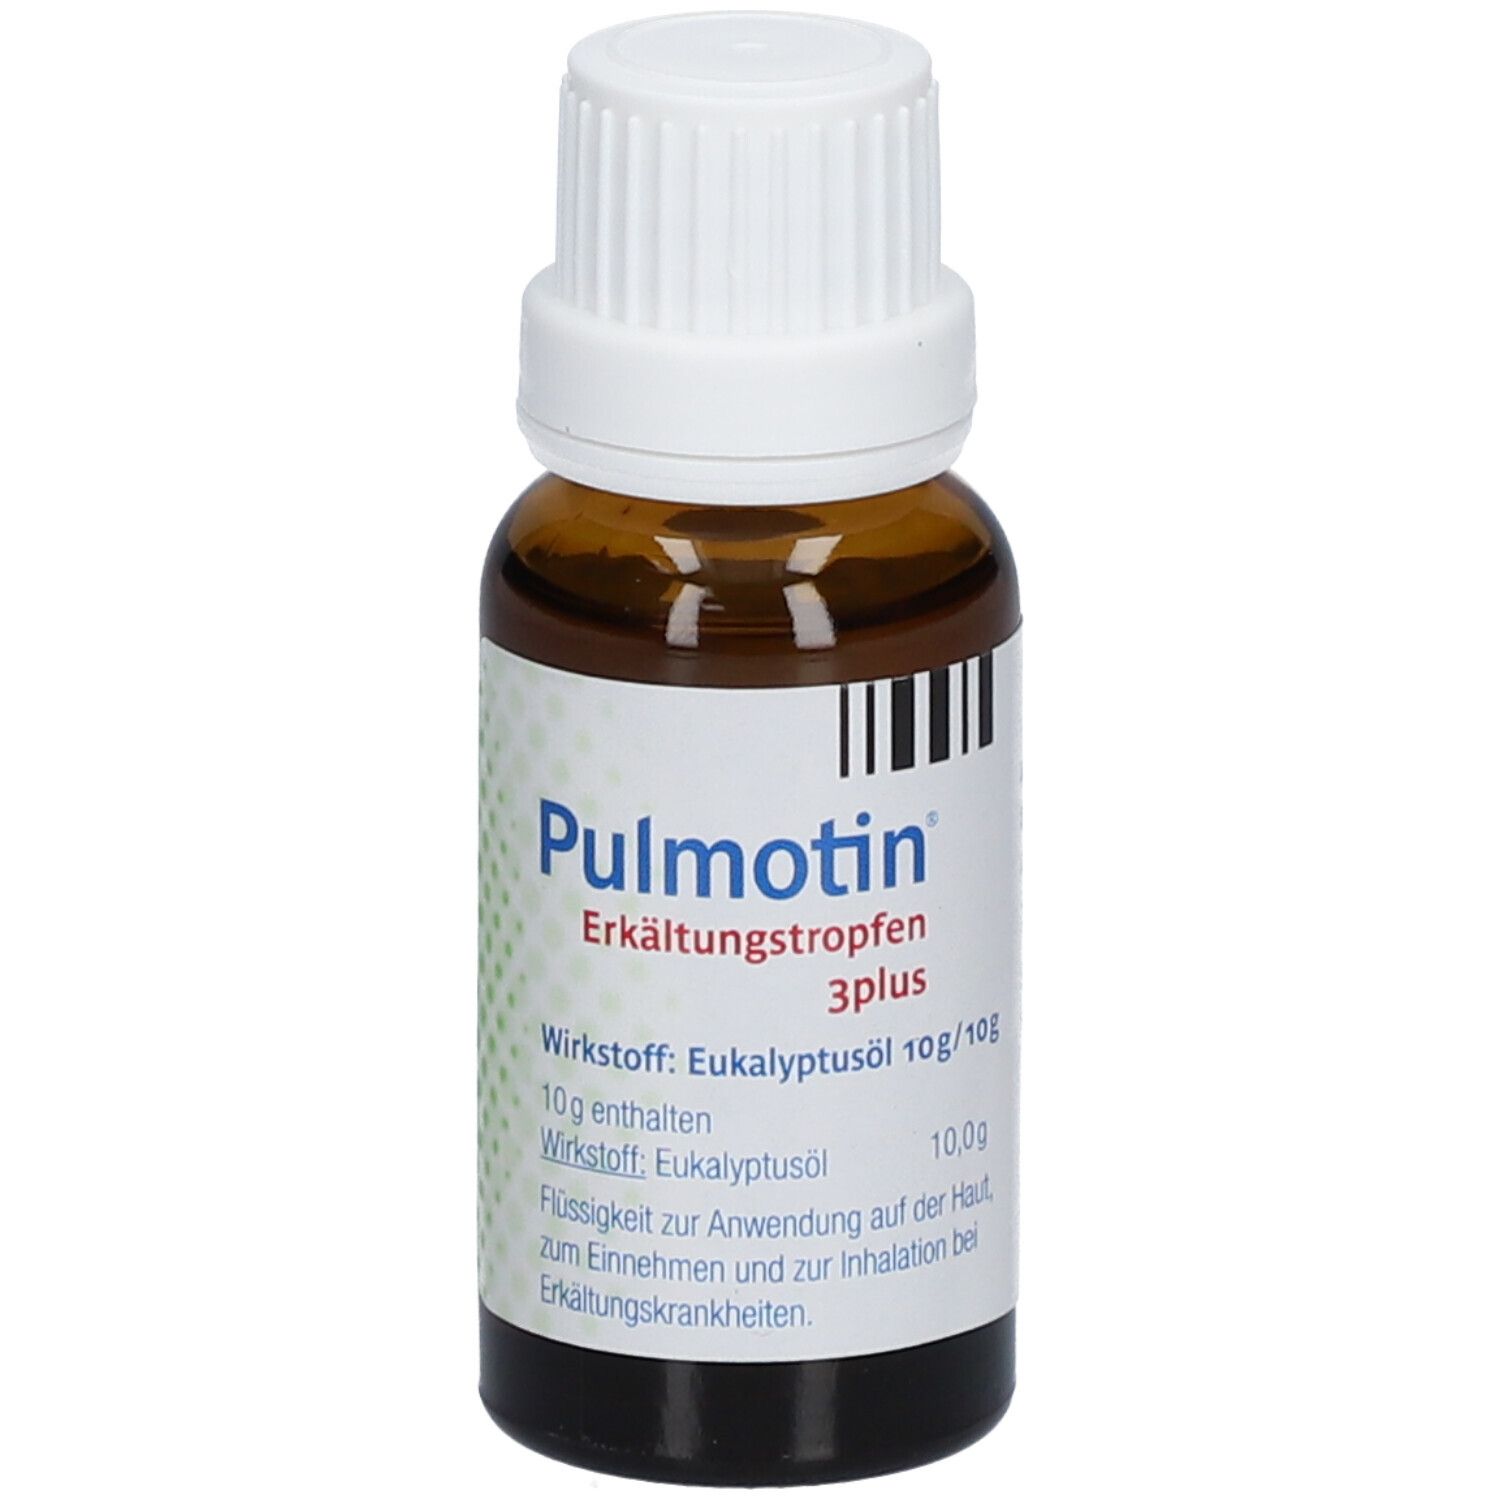 Pulmotin® Erkältungstropfen 3plus